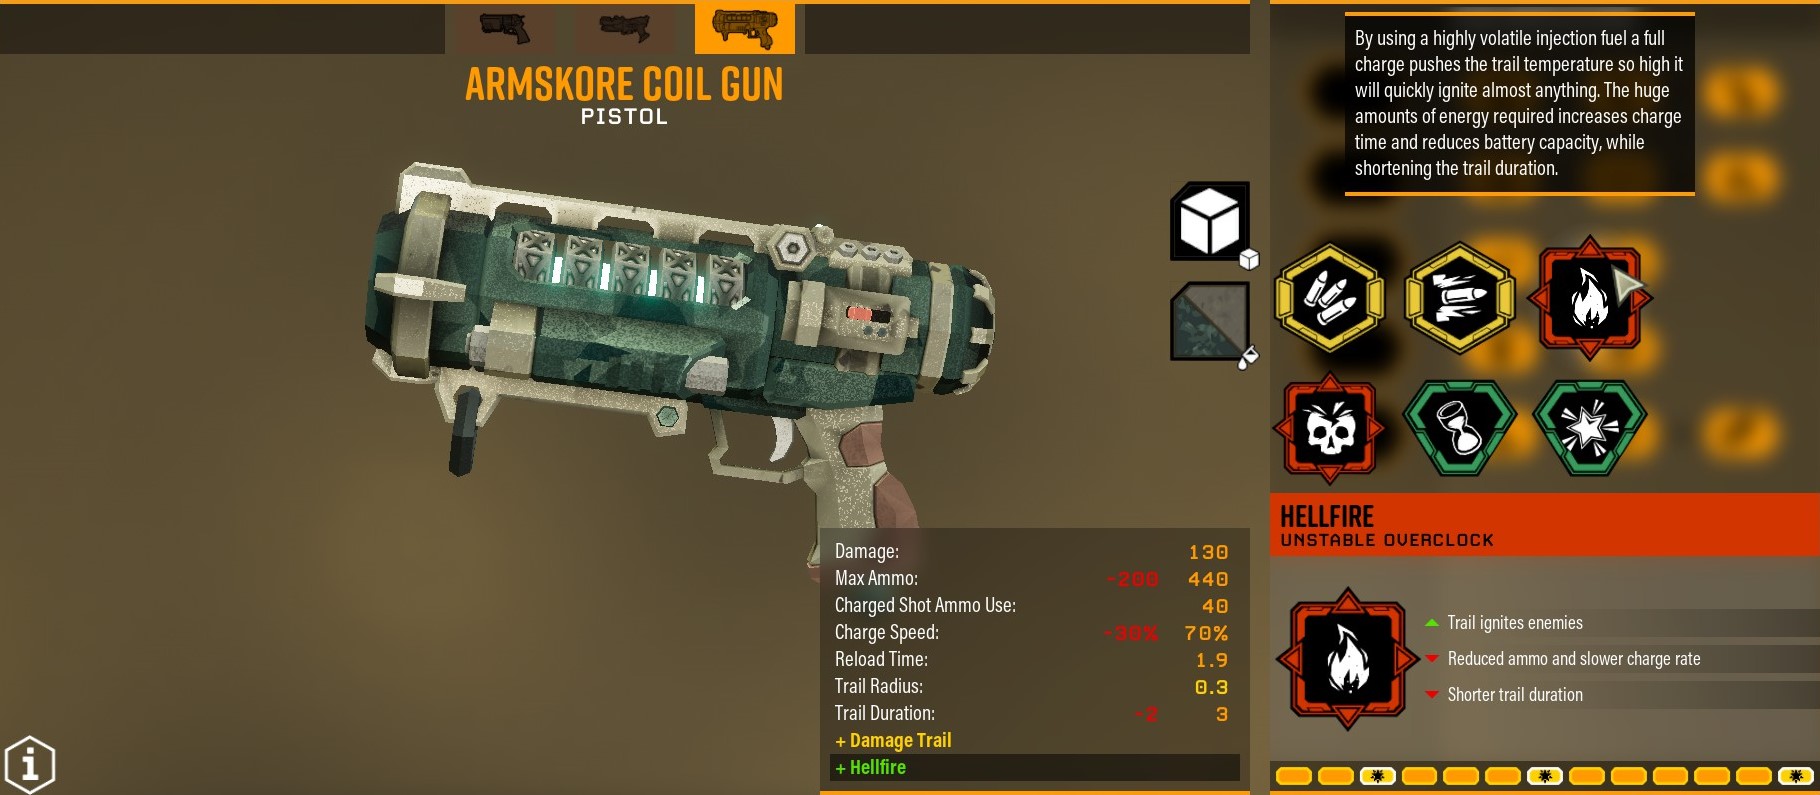 Hellfire Overclock for the ArmsKore Coil Gun